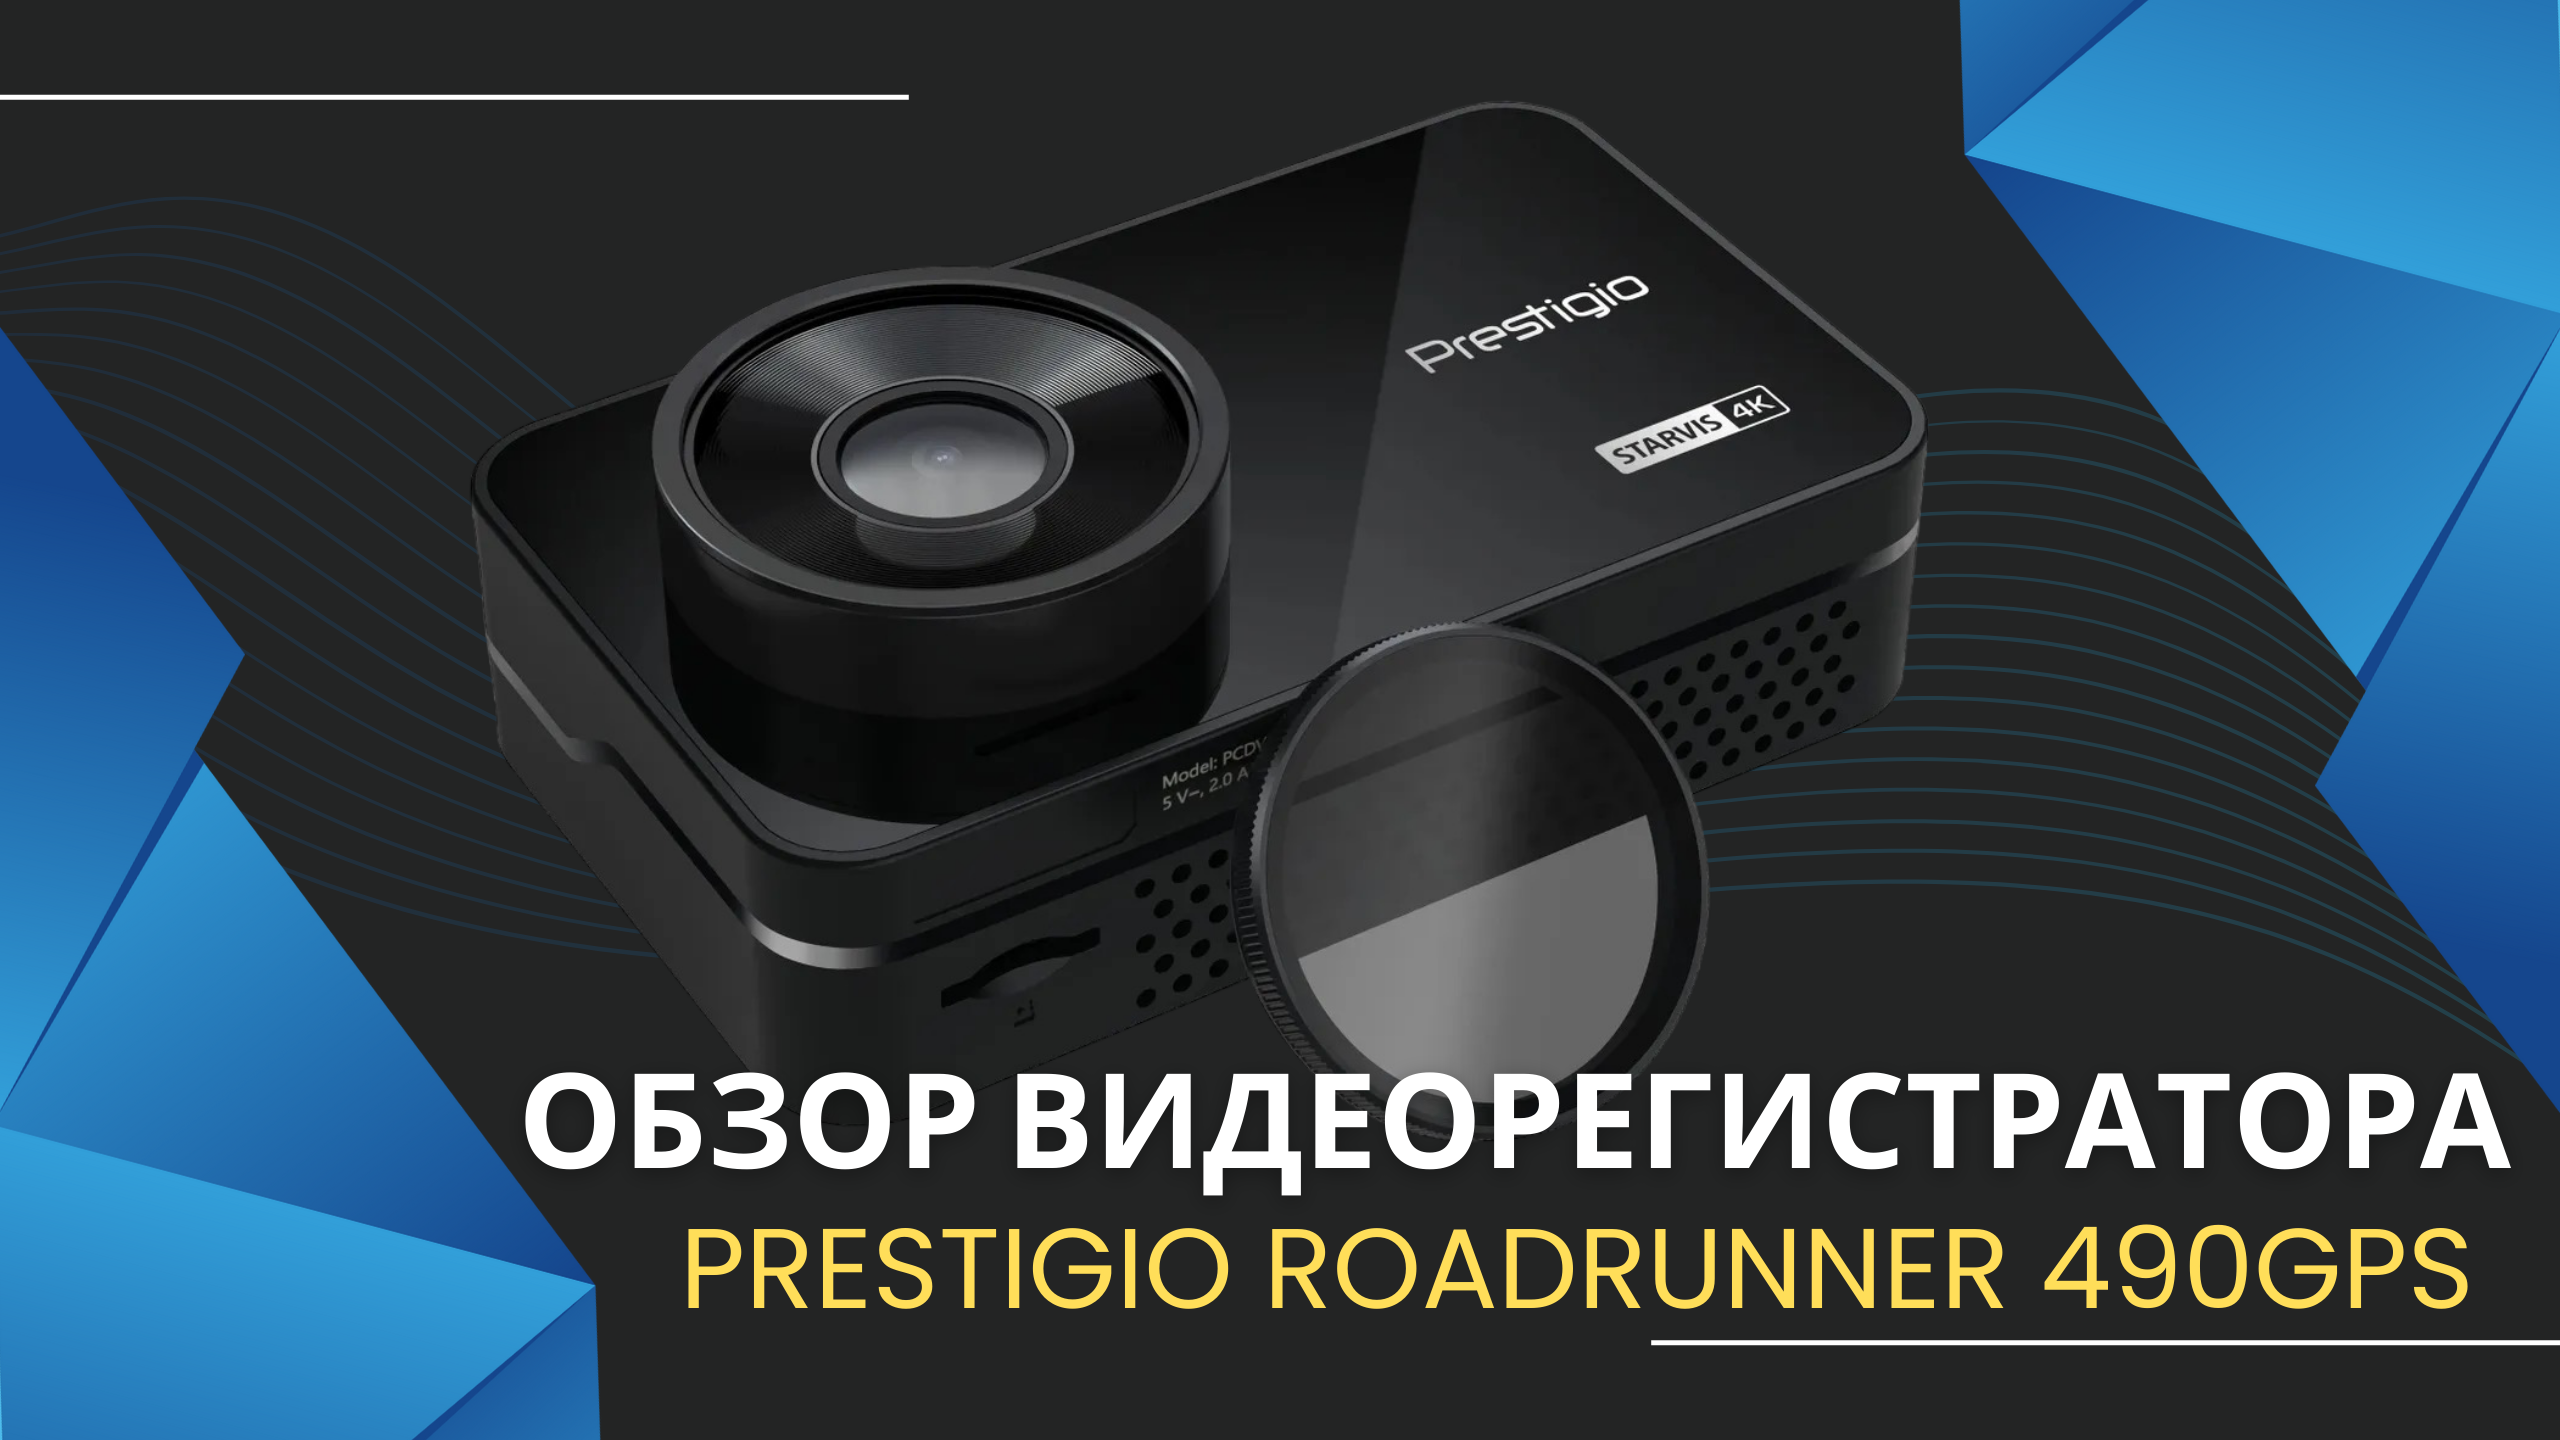 Обзор видеорегистратора Prestigio Roadrunner 490GPS (Sony Stravis 4К, GPS информатор, Wi-Fi, CPL)